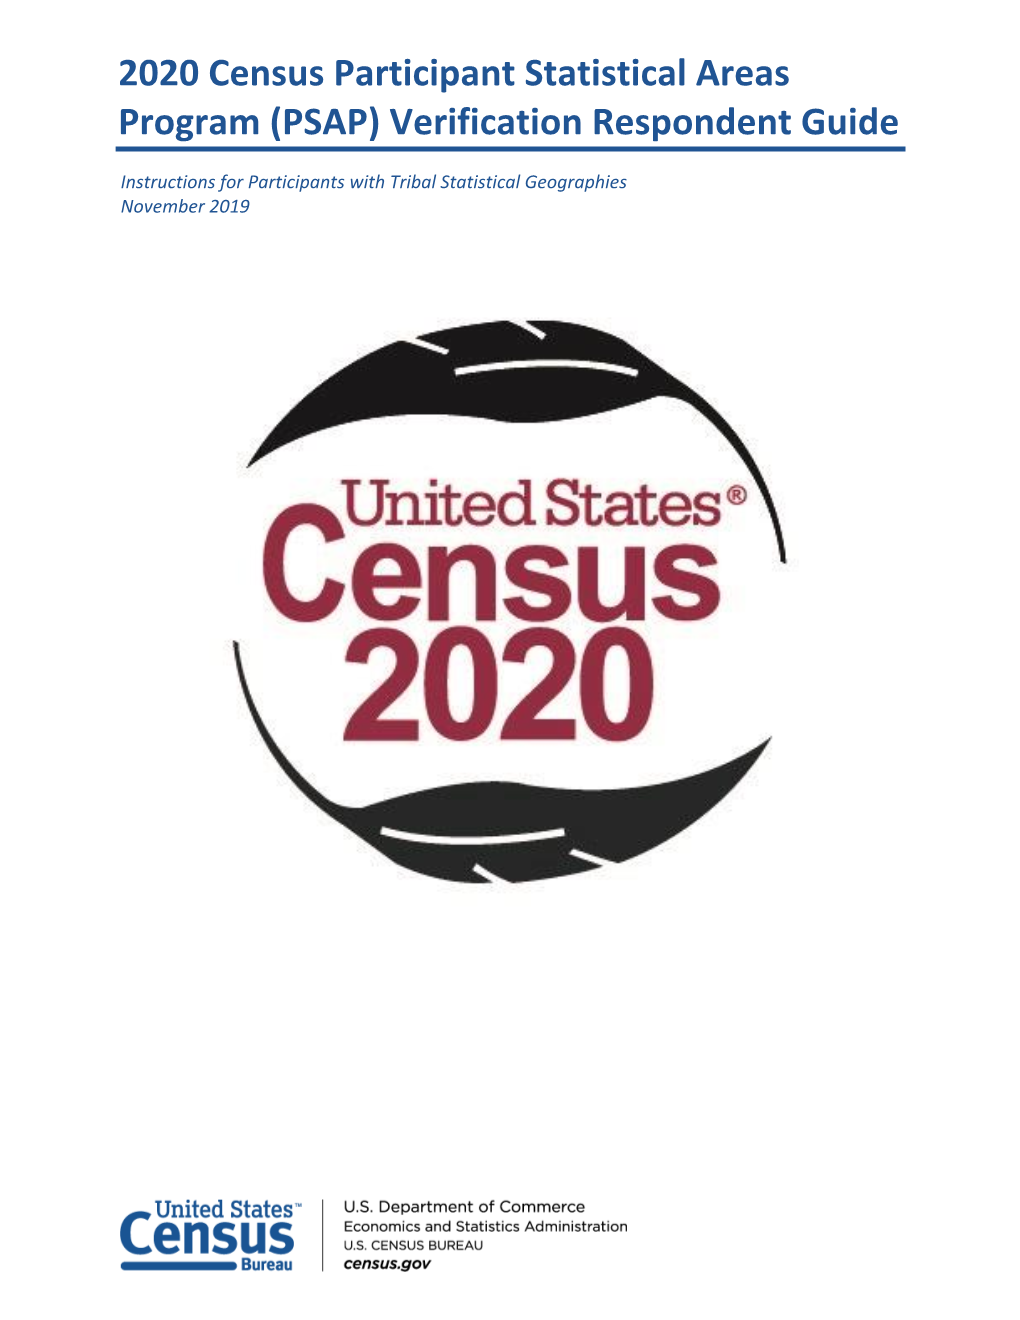 2020 Census Participant Statistical Areas Program (PSAP) Verification Respondent Guide